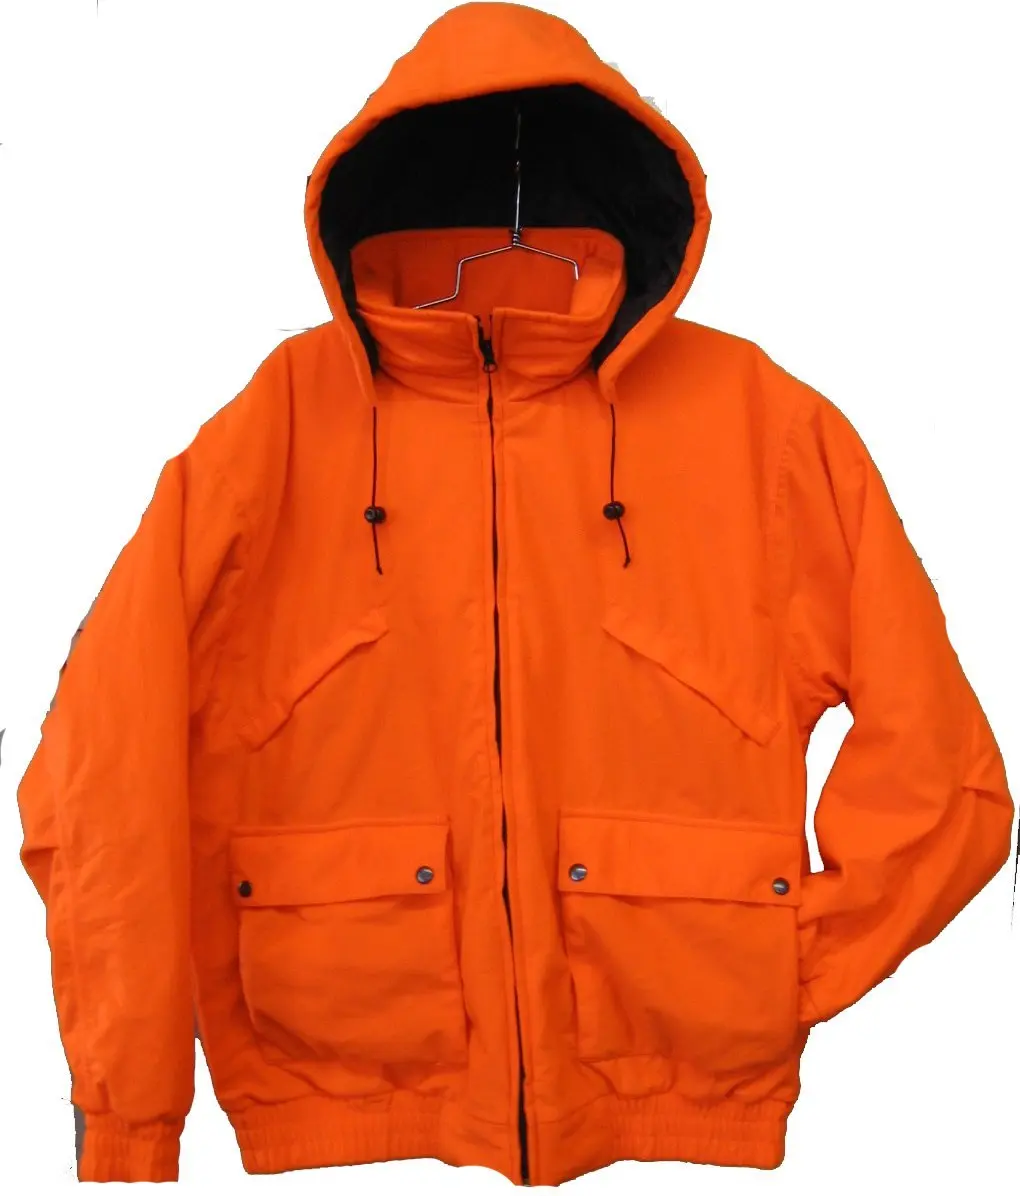 Cheap Blaze Orange Jacket, find Blaze Orange Jacket deals on line at ...